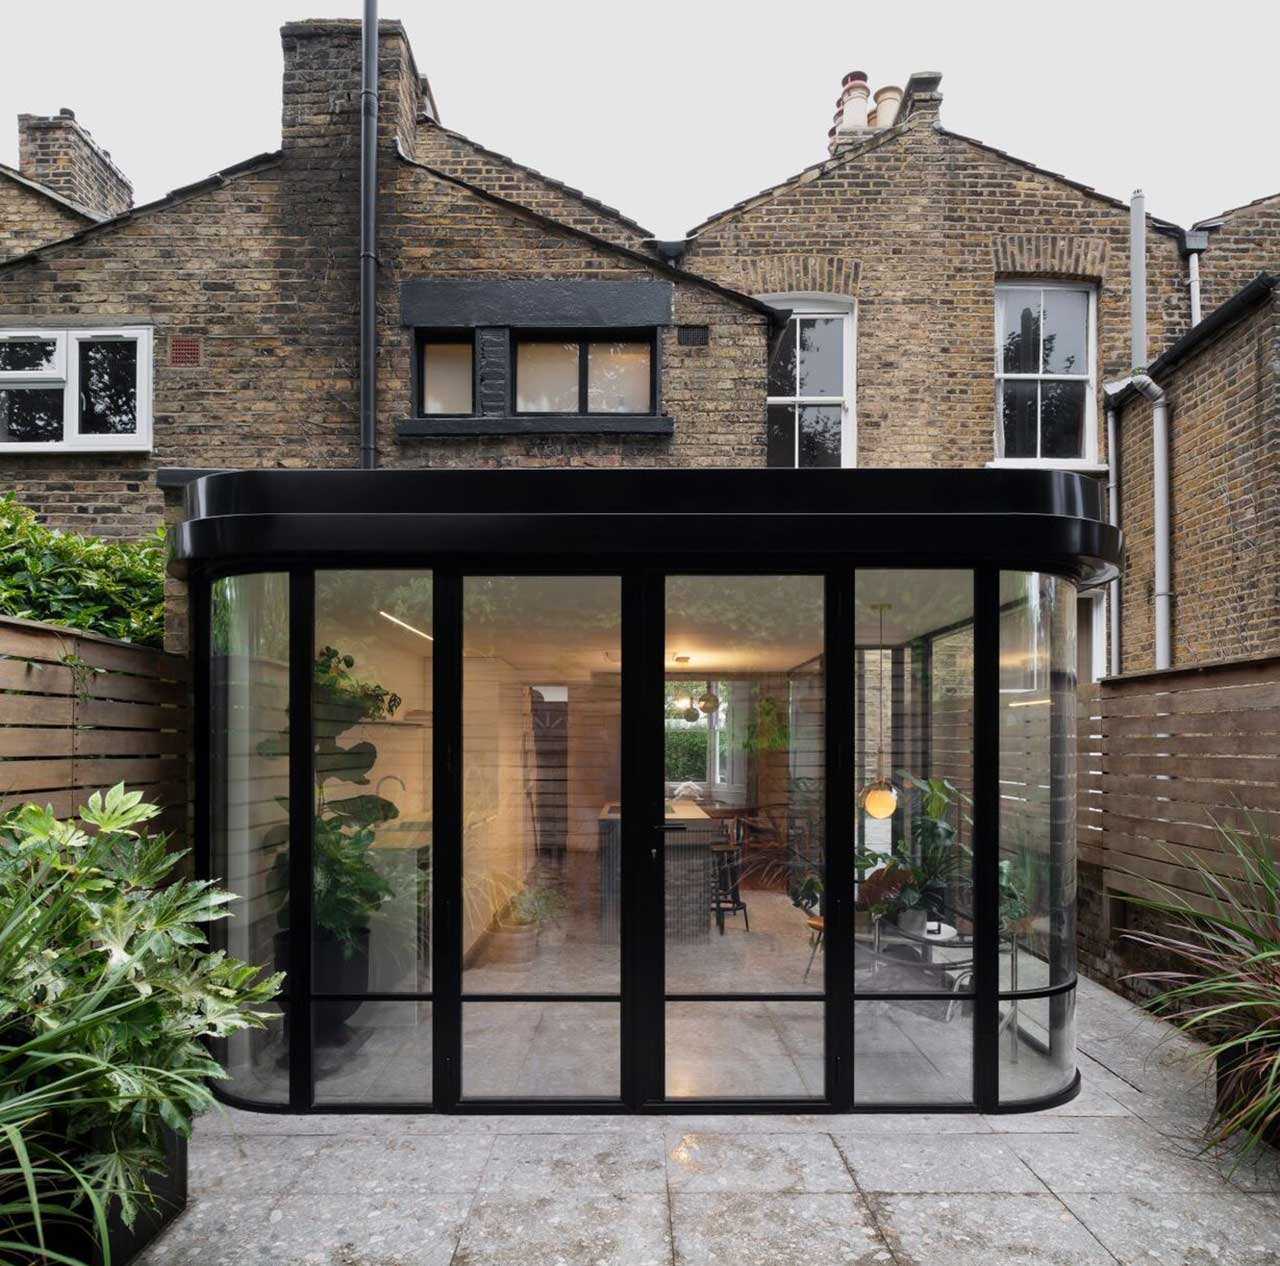 Bureau de Change Adds Glass Pavilion to Home in London